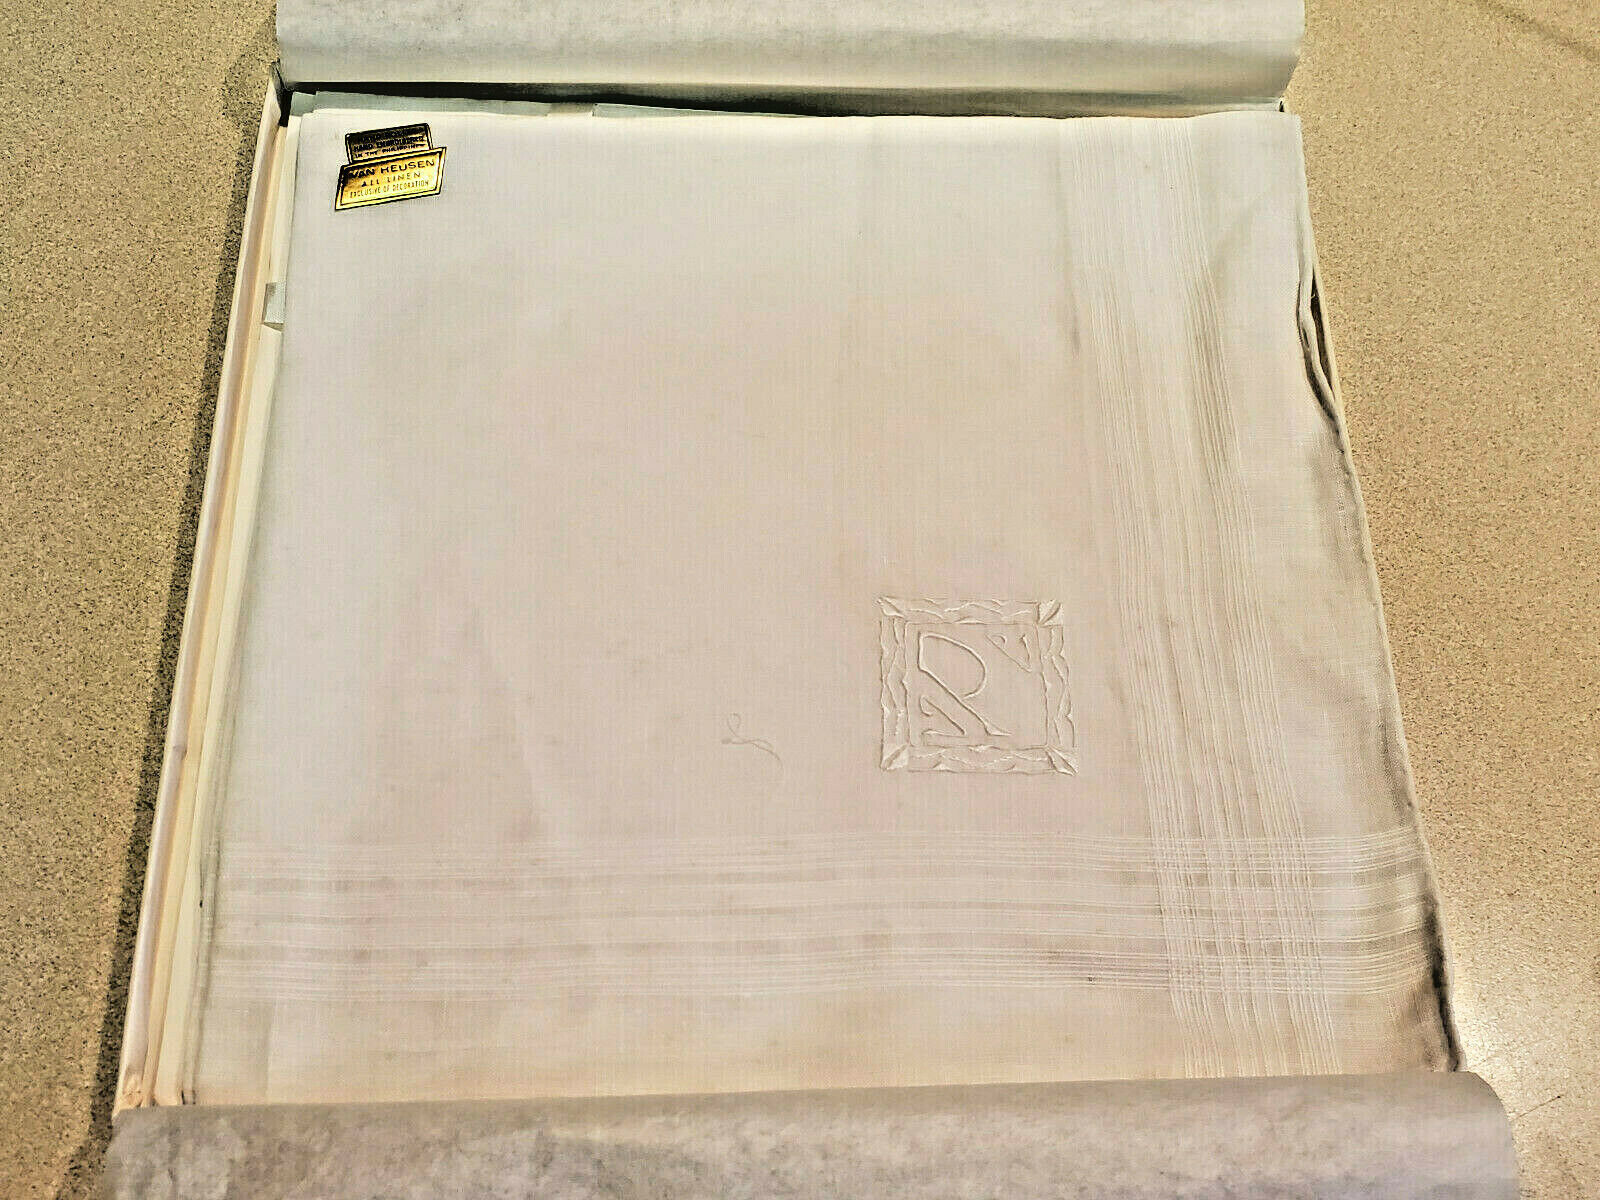 Primary image for Vintage Van Heusen All Linen Hand Rolled Embroidered Monogram Handkerchief Set